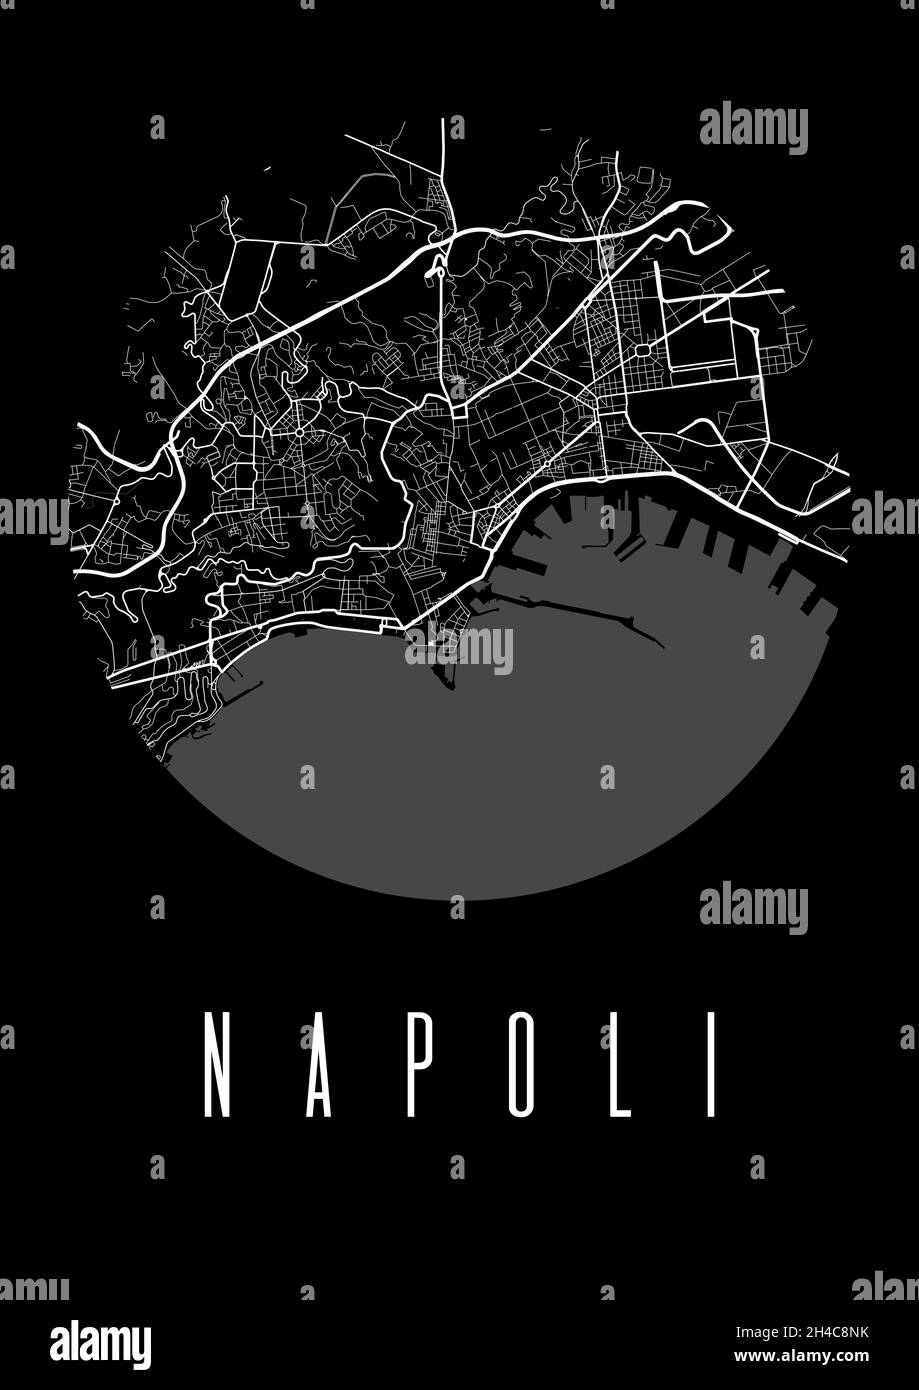 Neapel Kartenvektor schwarzes Poster. Runder Rundblick, Stadtplan von Neapel Stadtdarstellung. Stadtbild Fläche Panorama Silhouette Luftbild, Typografie Stock Vektor